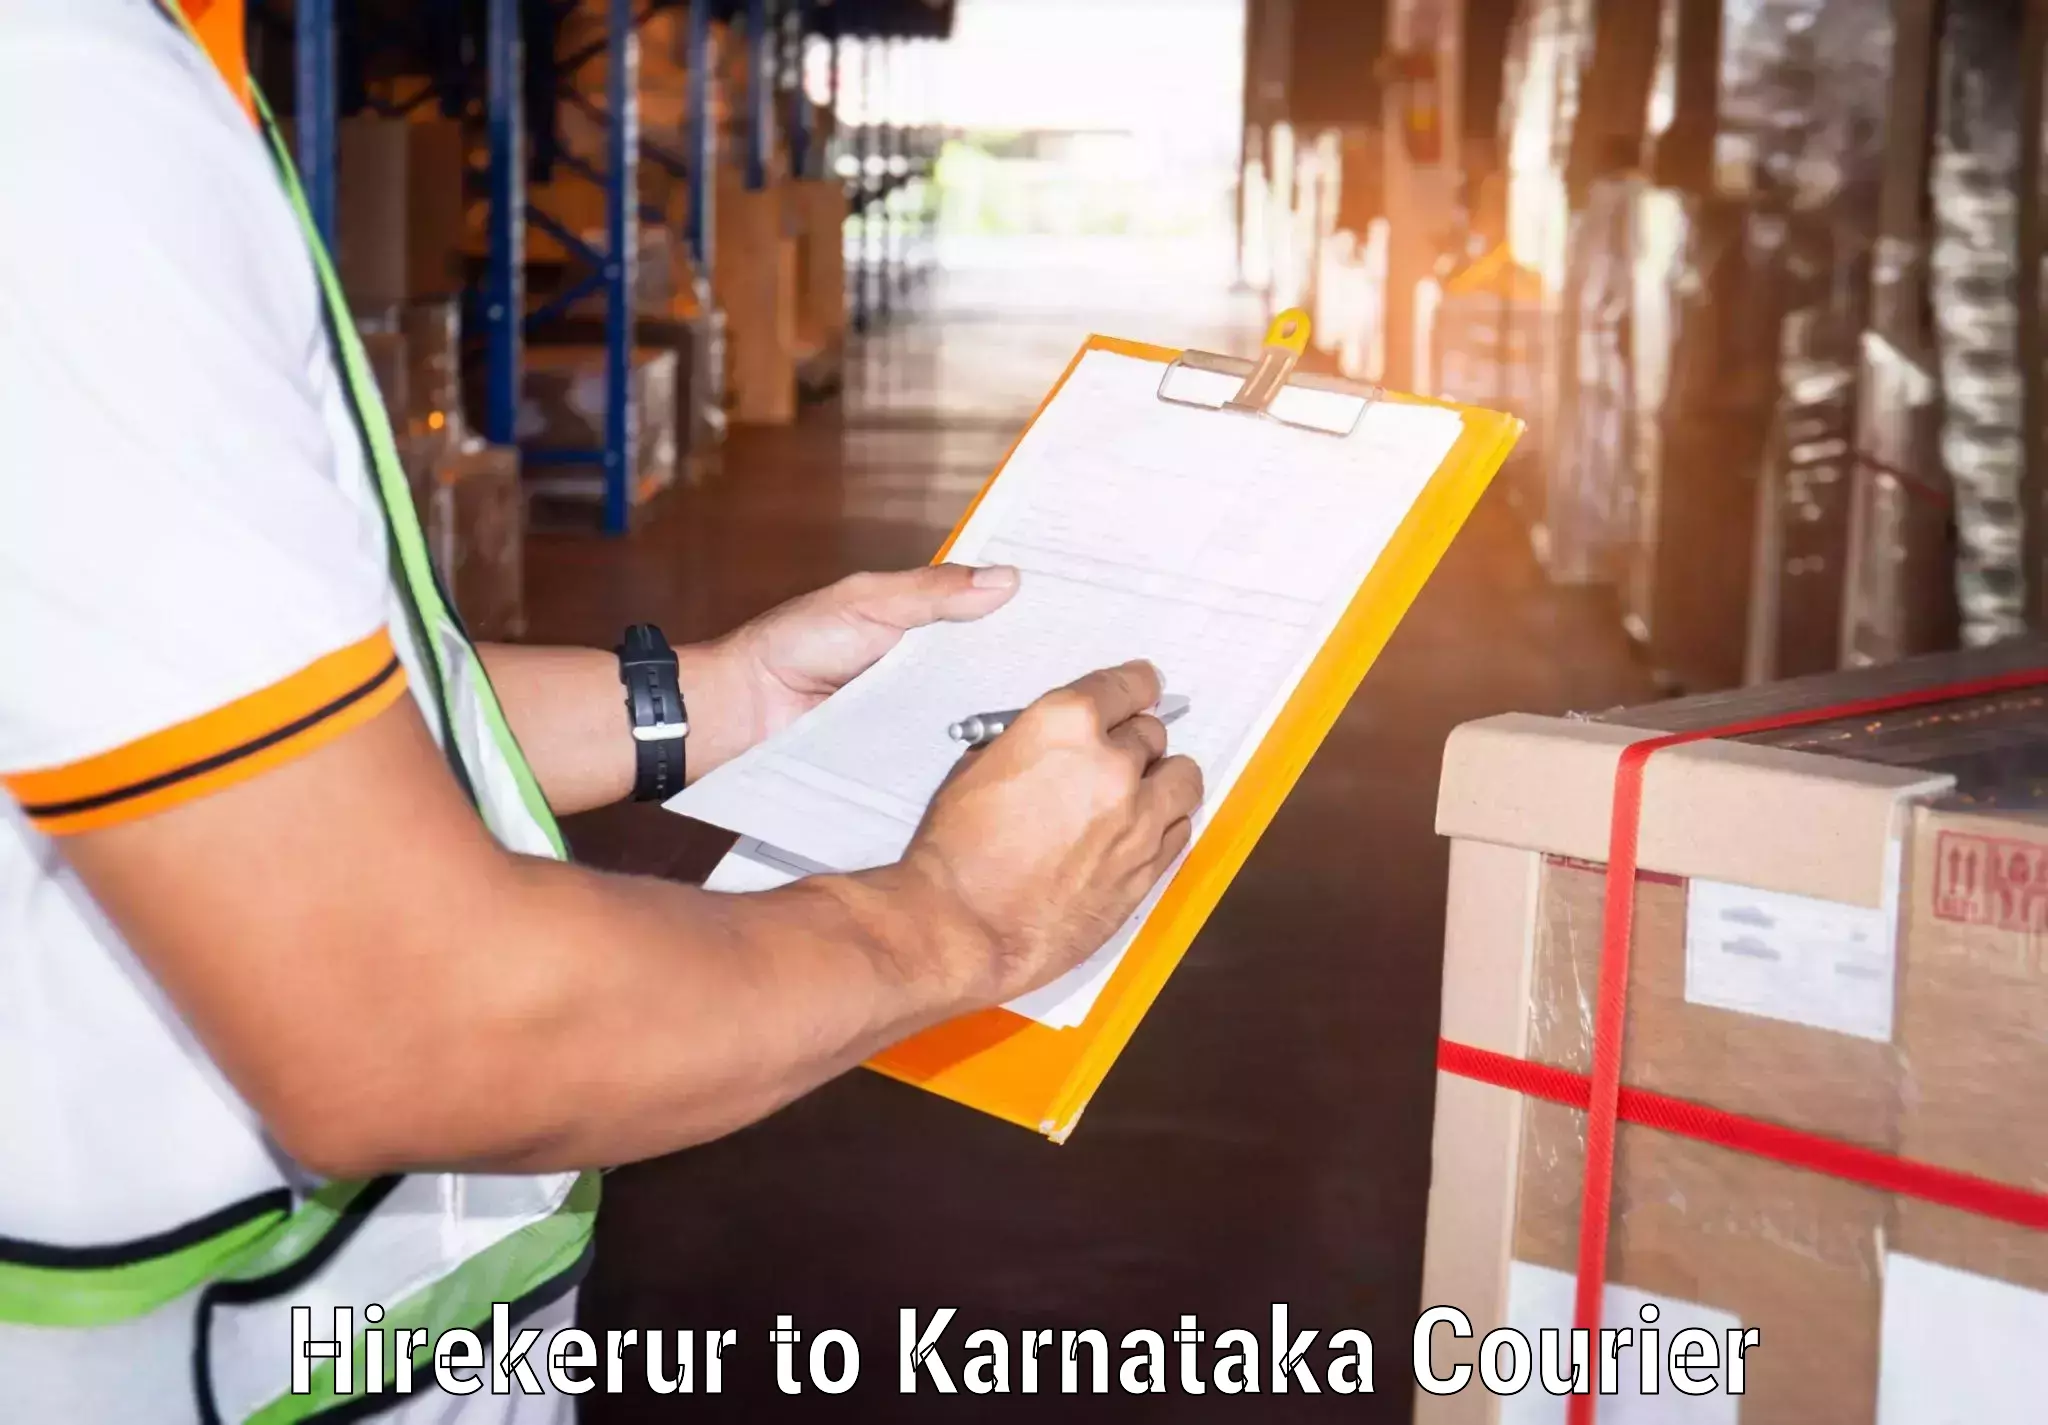 Global logistics network Hirekerur to Kulshekar